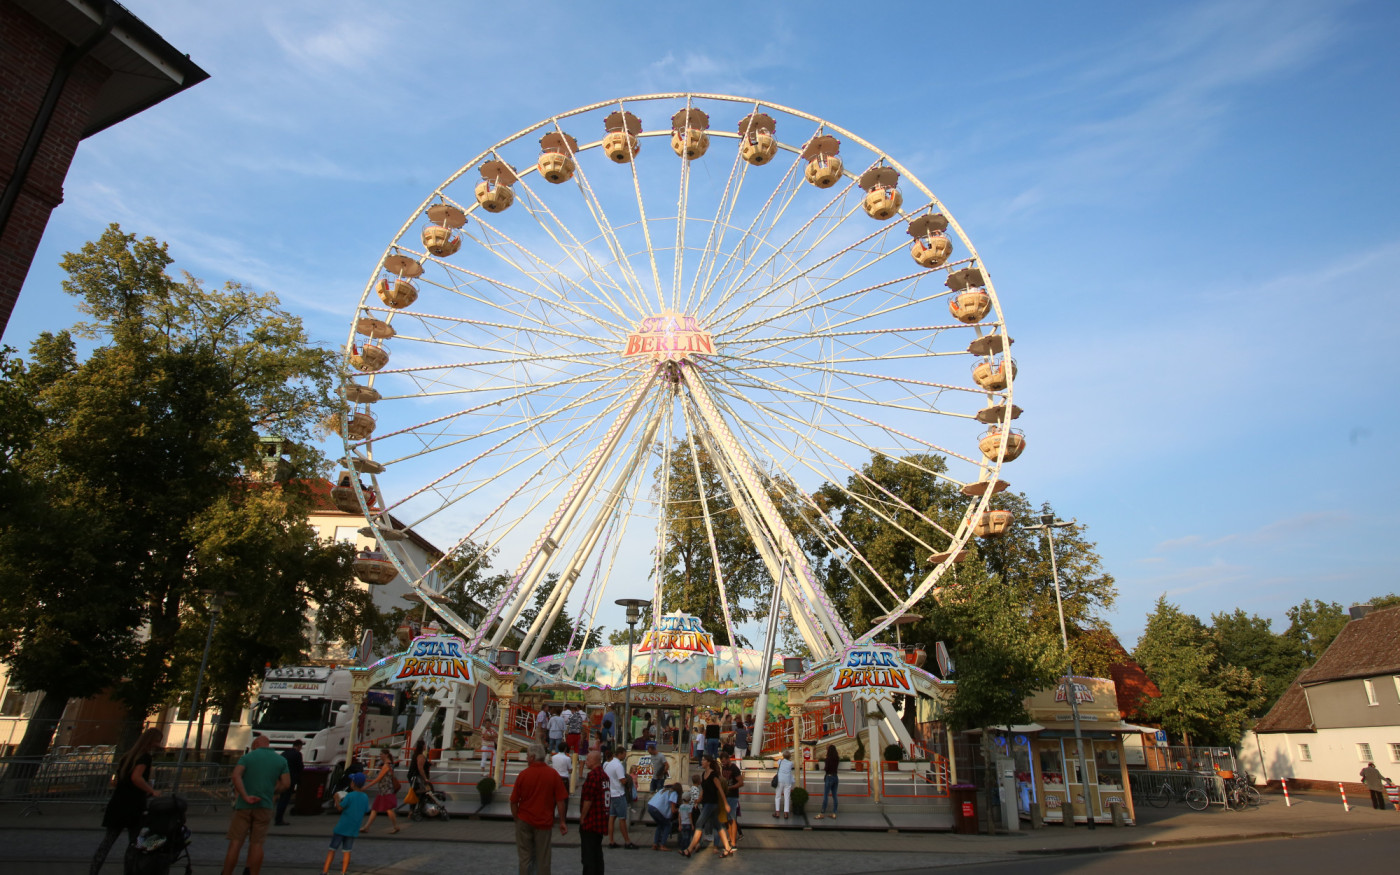 Gifhorn feiert den Sommer - AltSTATTfest statt Altstadtfest steigt vom 19. bis 22. August